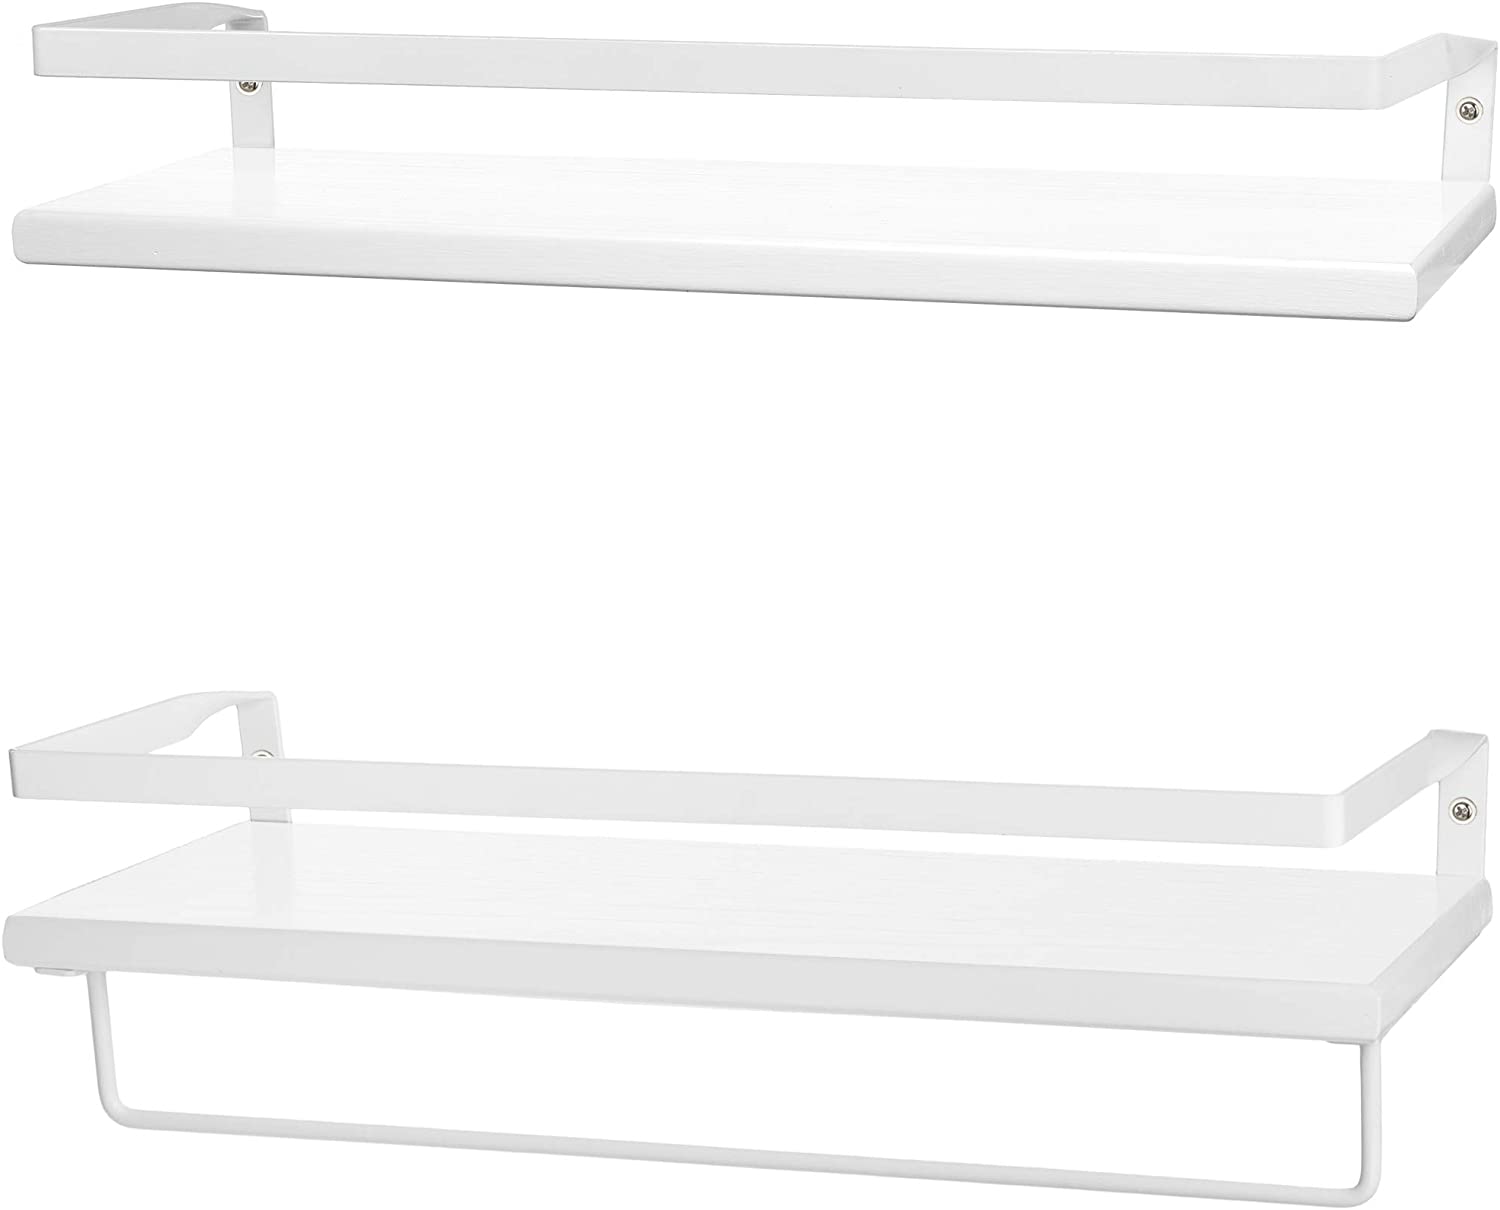 Peter’s Goods Floating Bathroom Shelves With Rail, White, 2-Pack